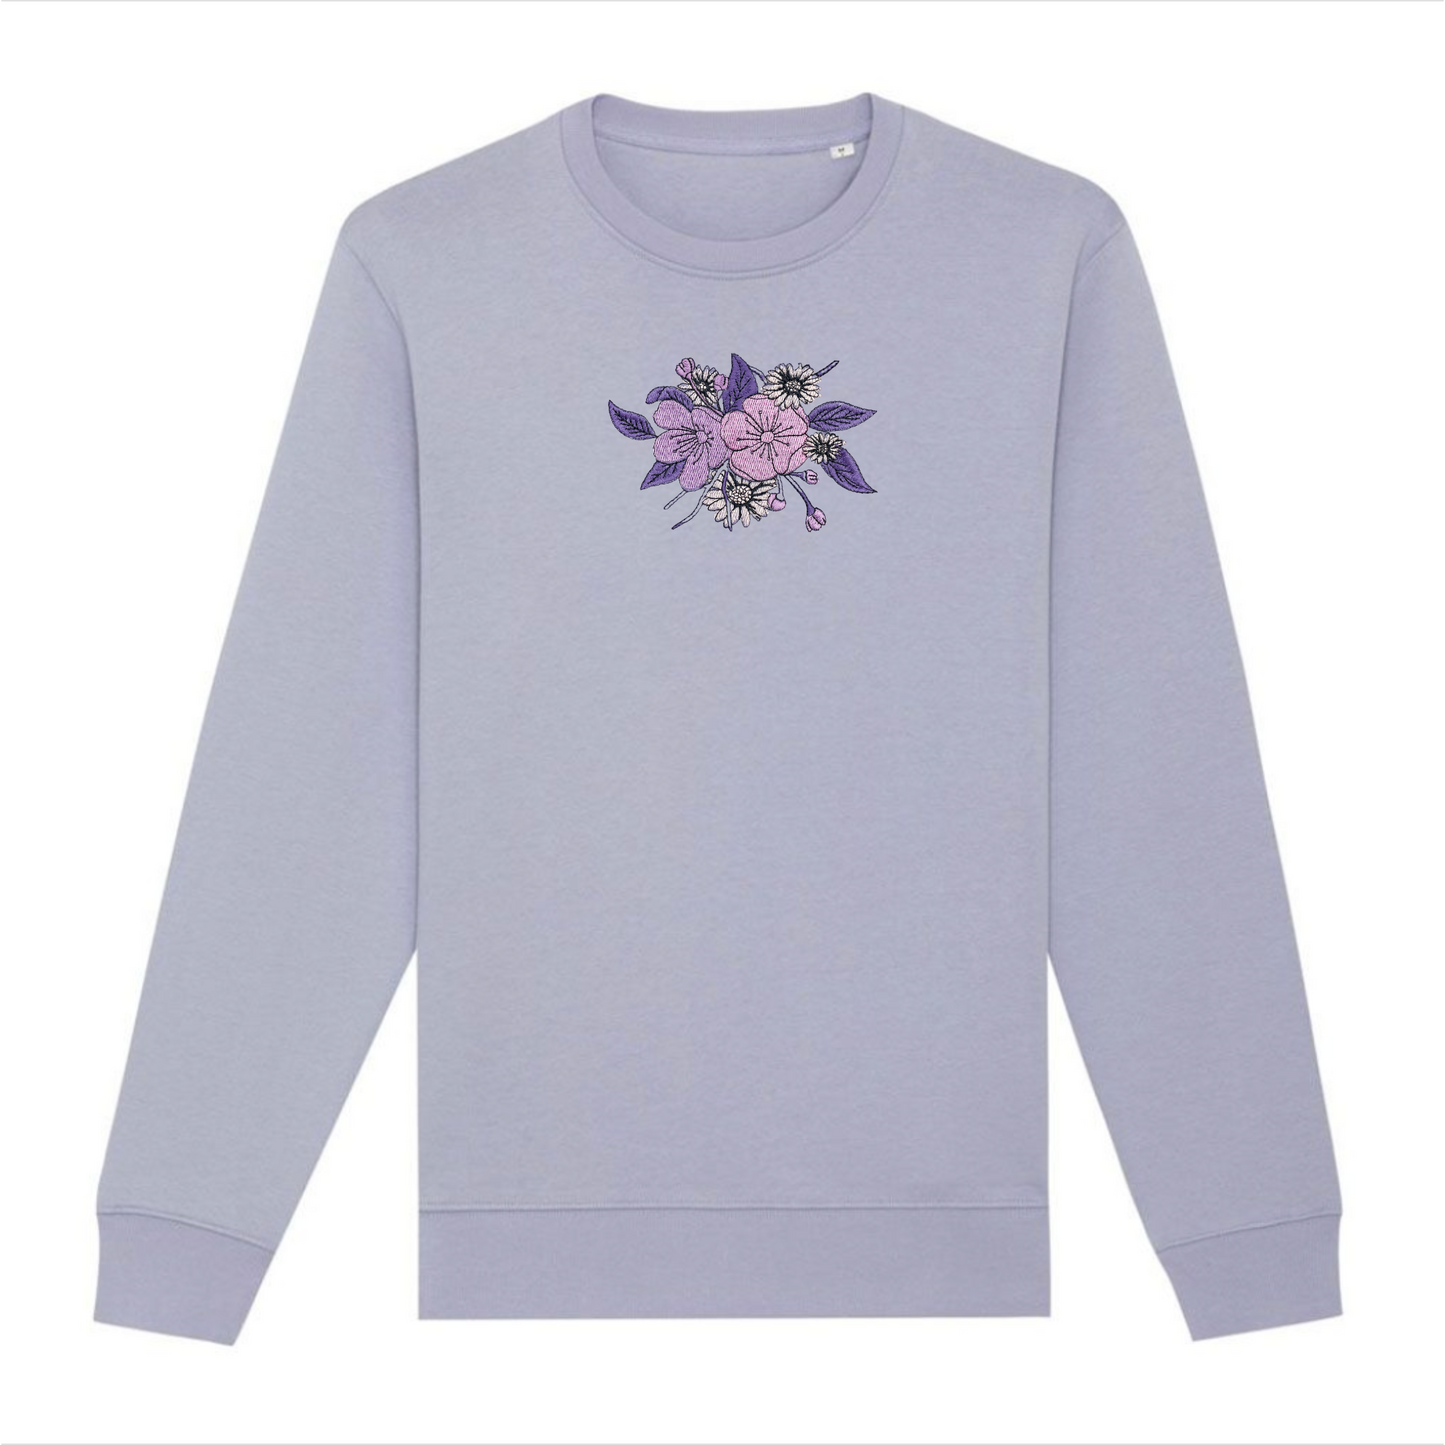 Organic Embroidered Sweatshirt - 'I Can Buy Myself Flowers' - New Design